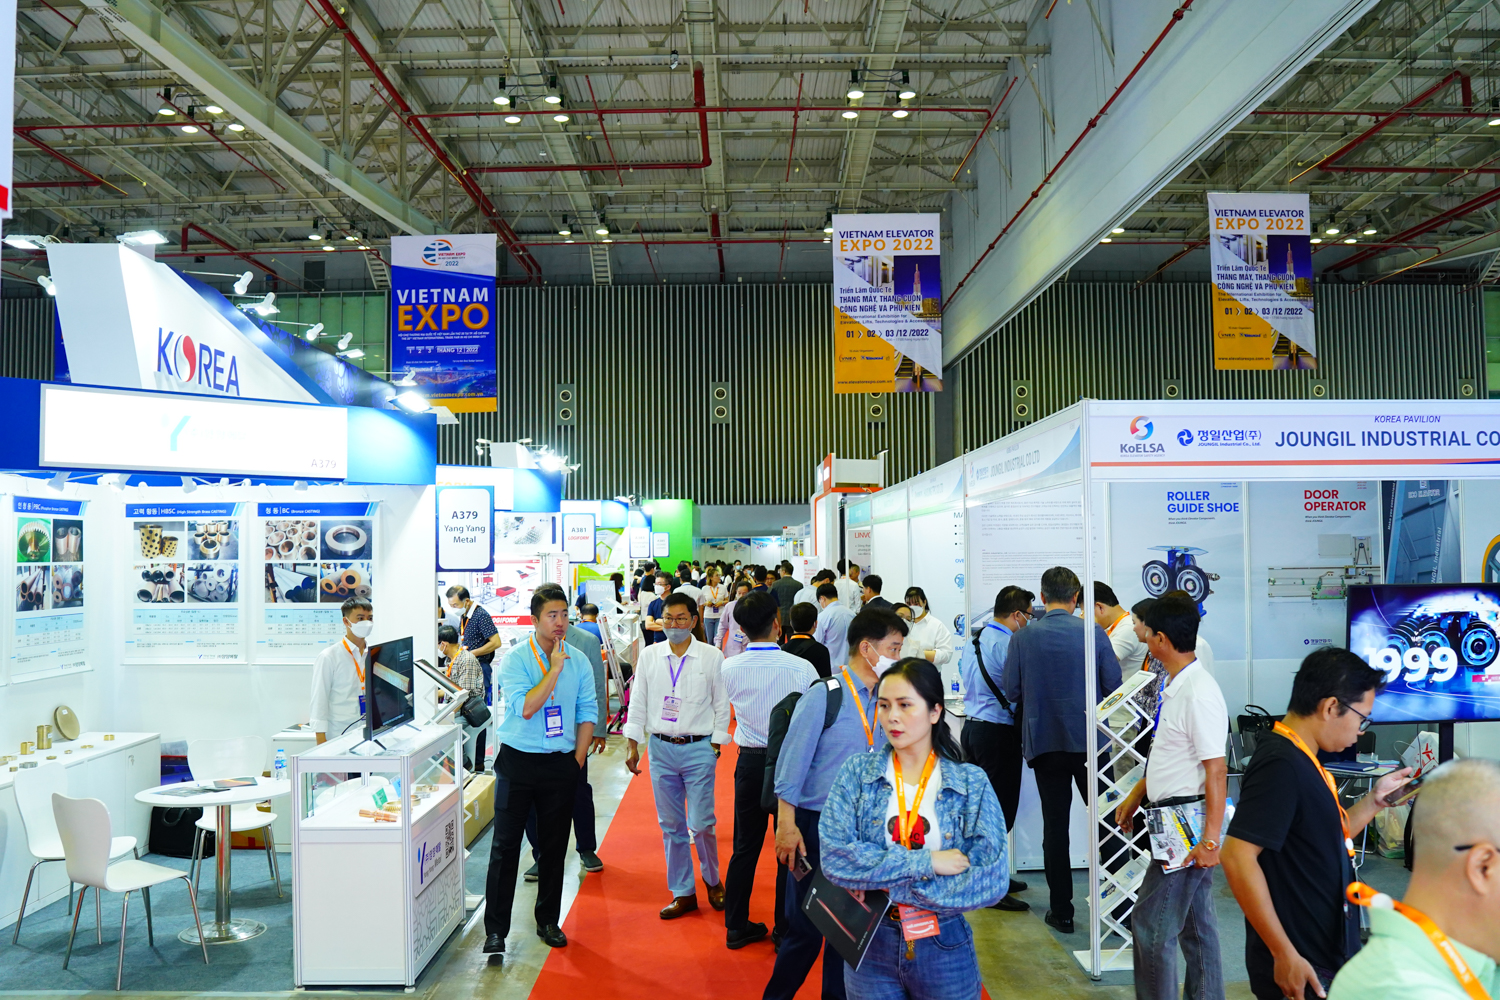 The 21st Vietnam International Trade Fair in Ho Chi Minh City - VIETNAM EXPO 2023 in HCMC